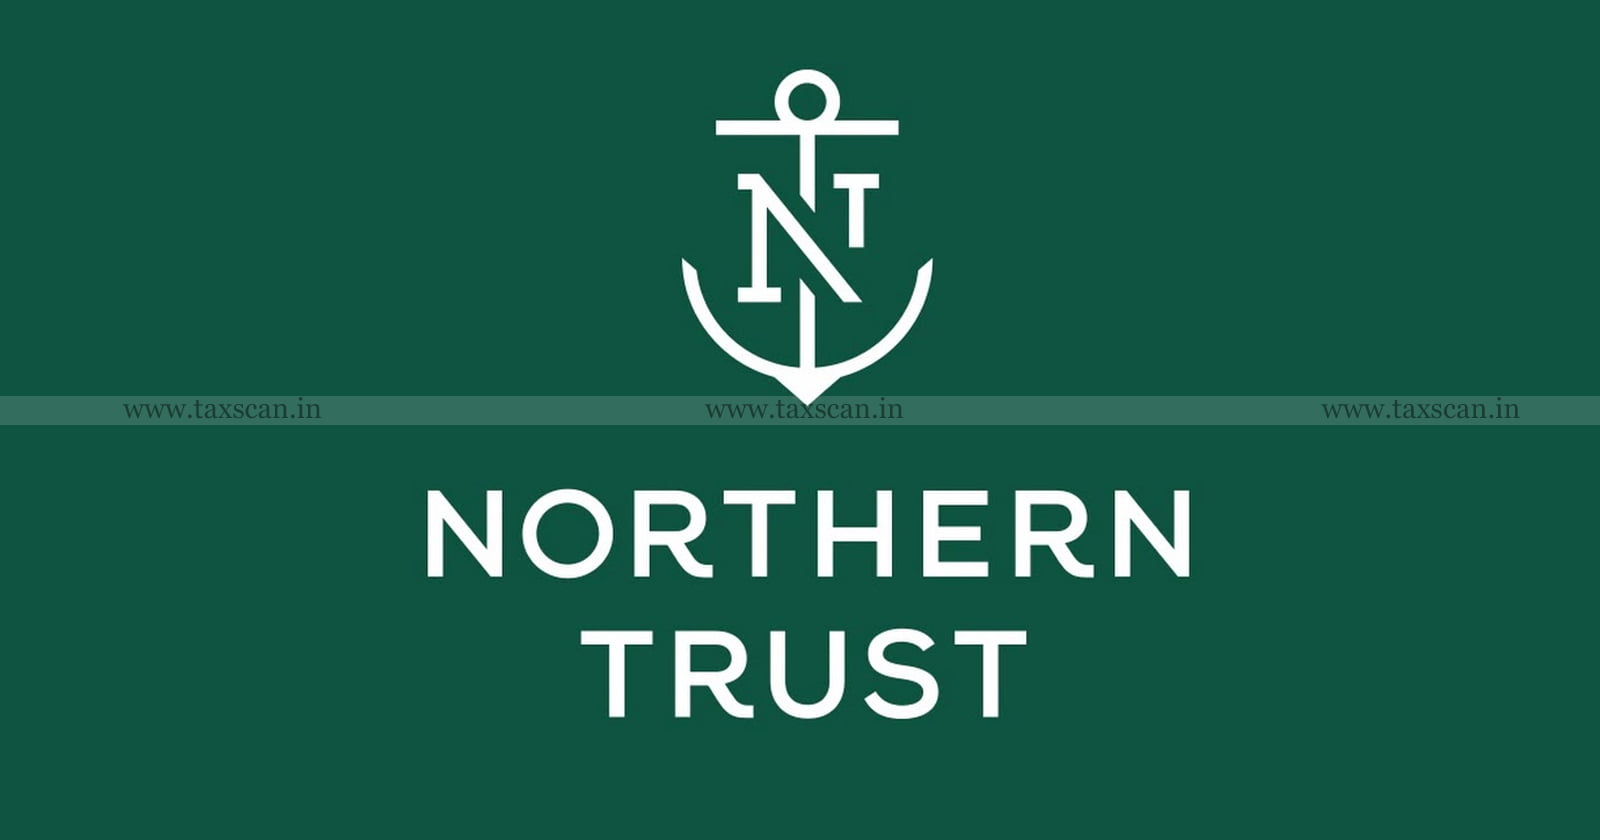 B.Com Vacancy - Northern Trust - jobscan - taxscan